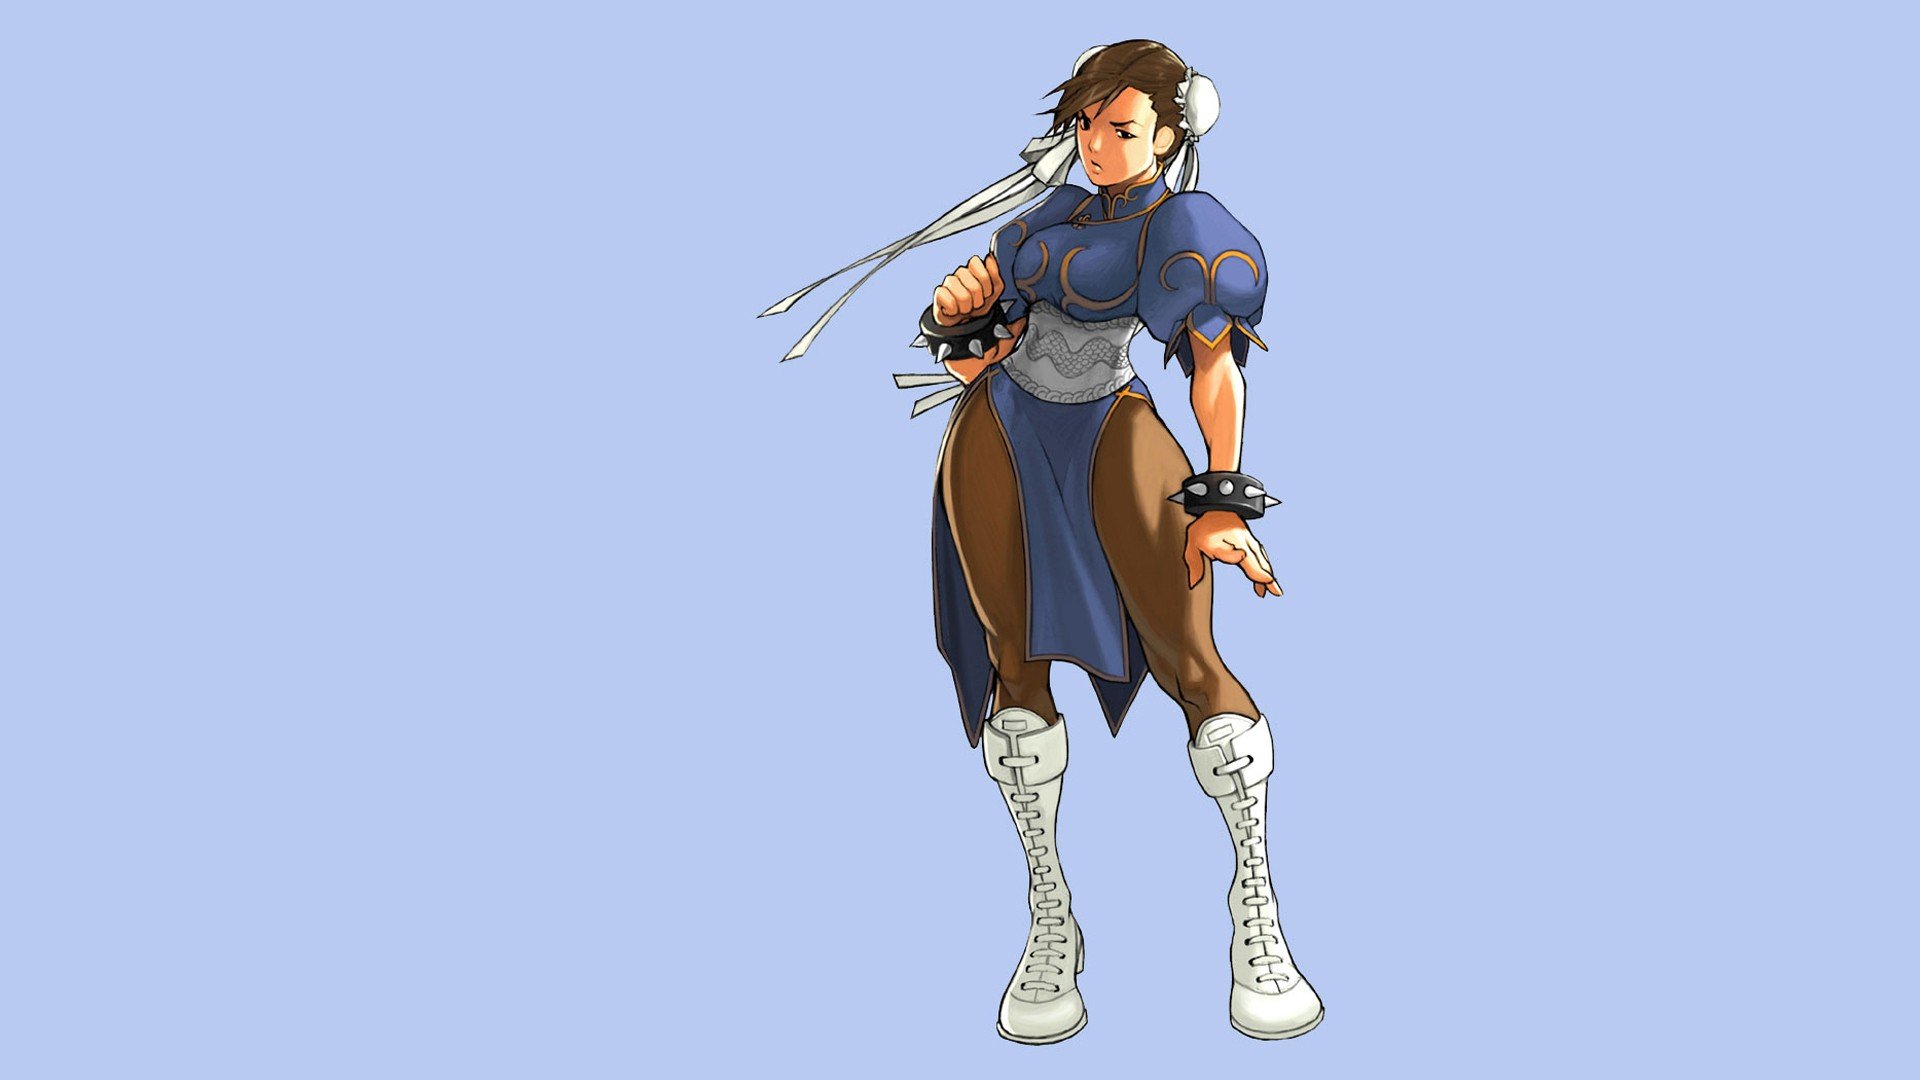 Chun Li, Illustration, Capcom, Blue background, Street Fighter Wallpaper